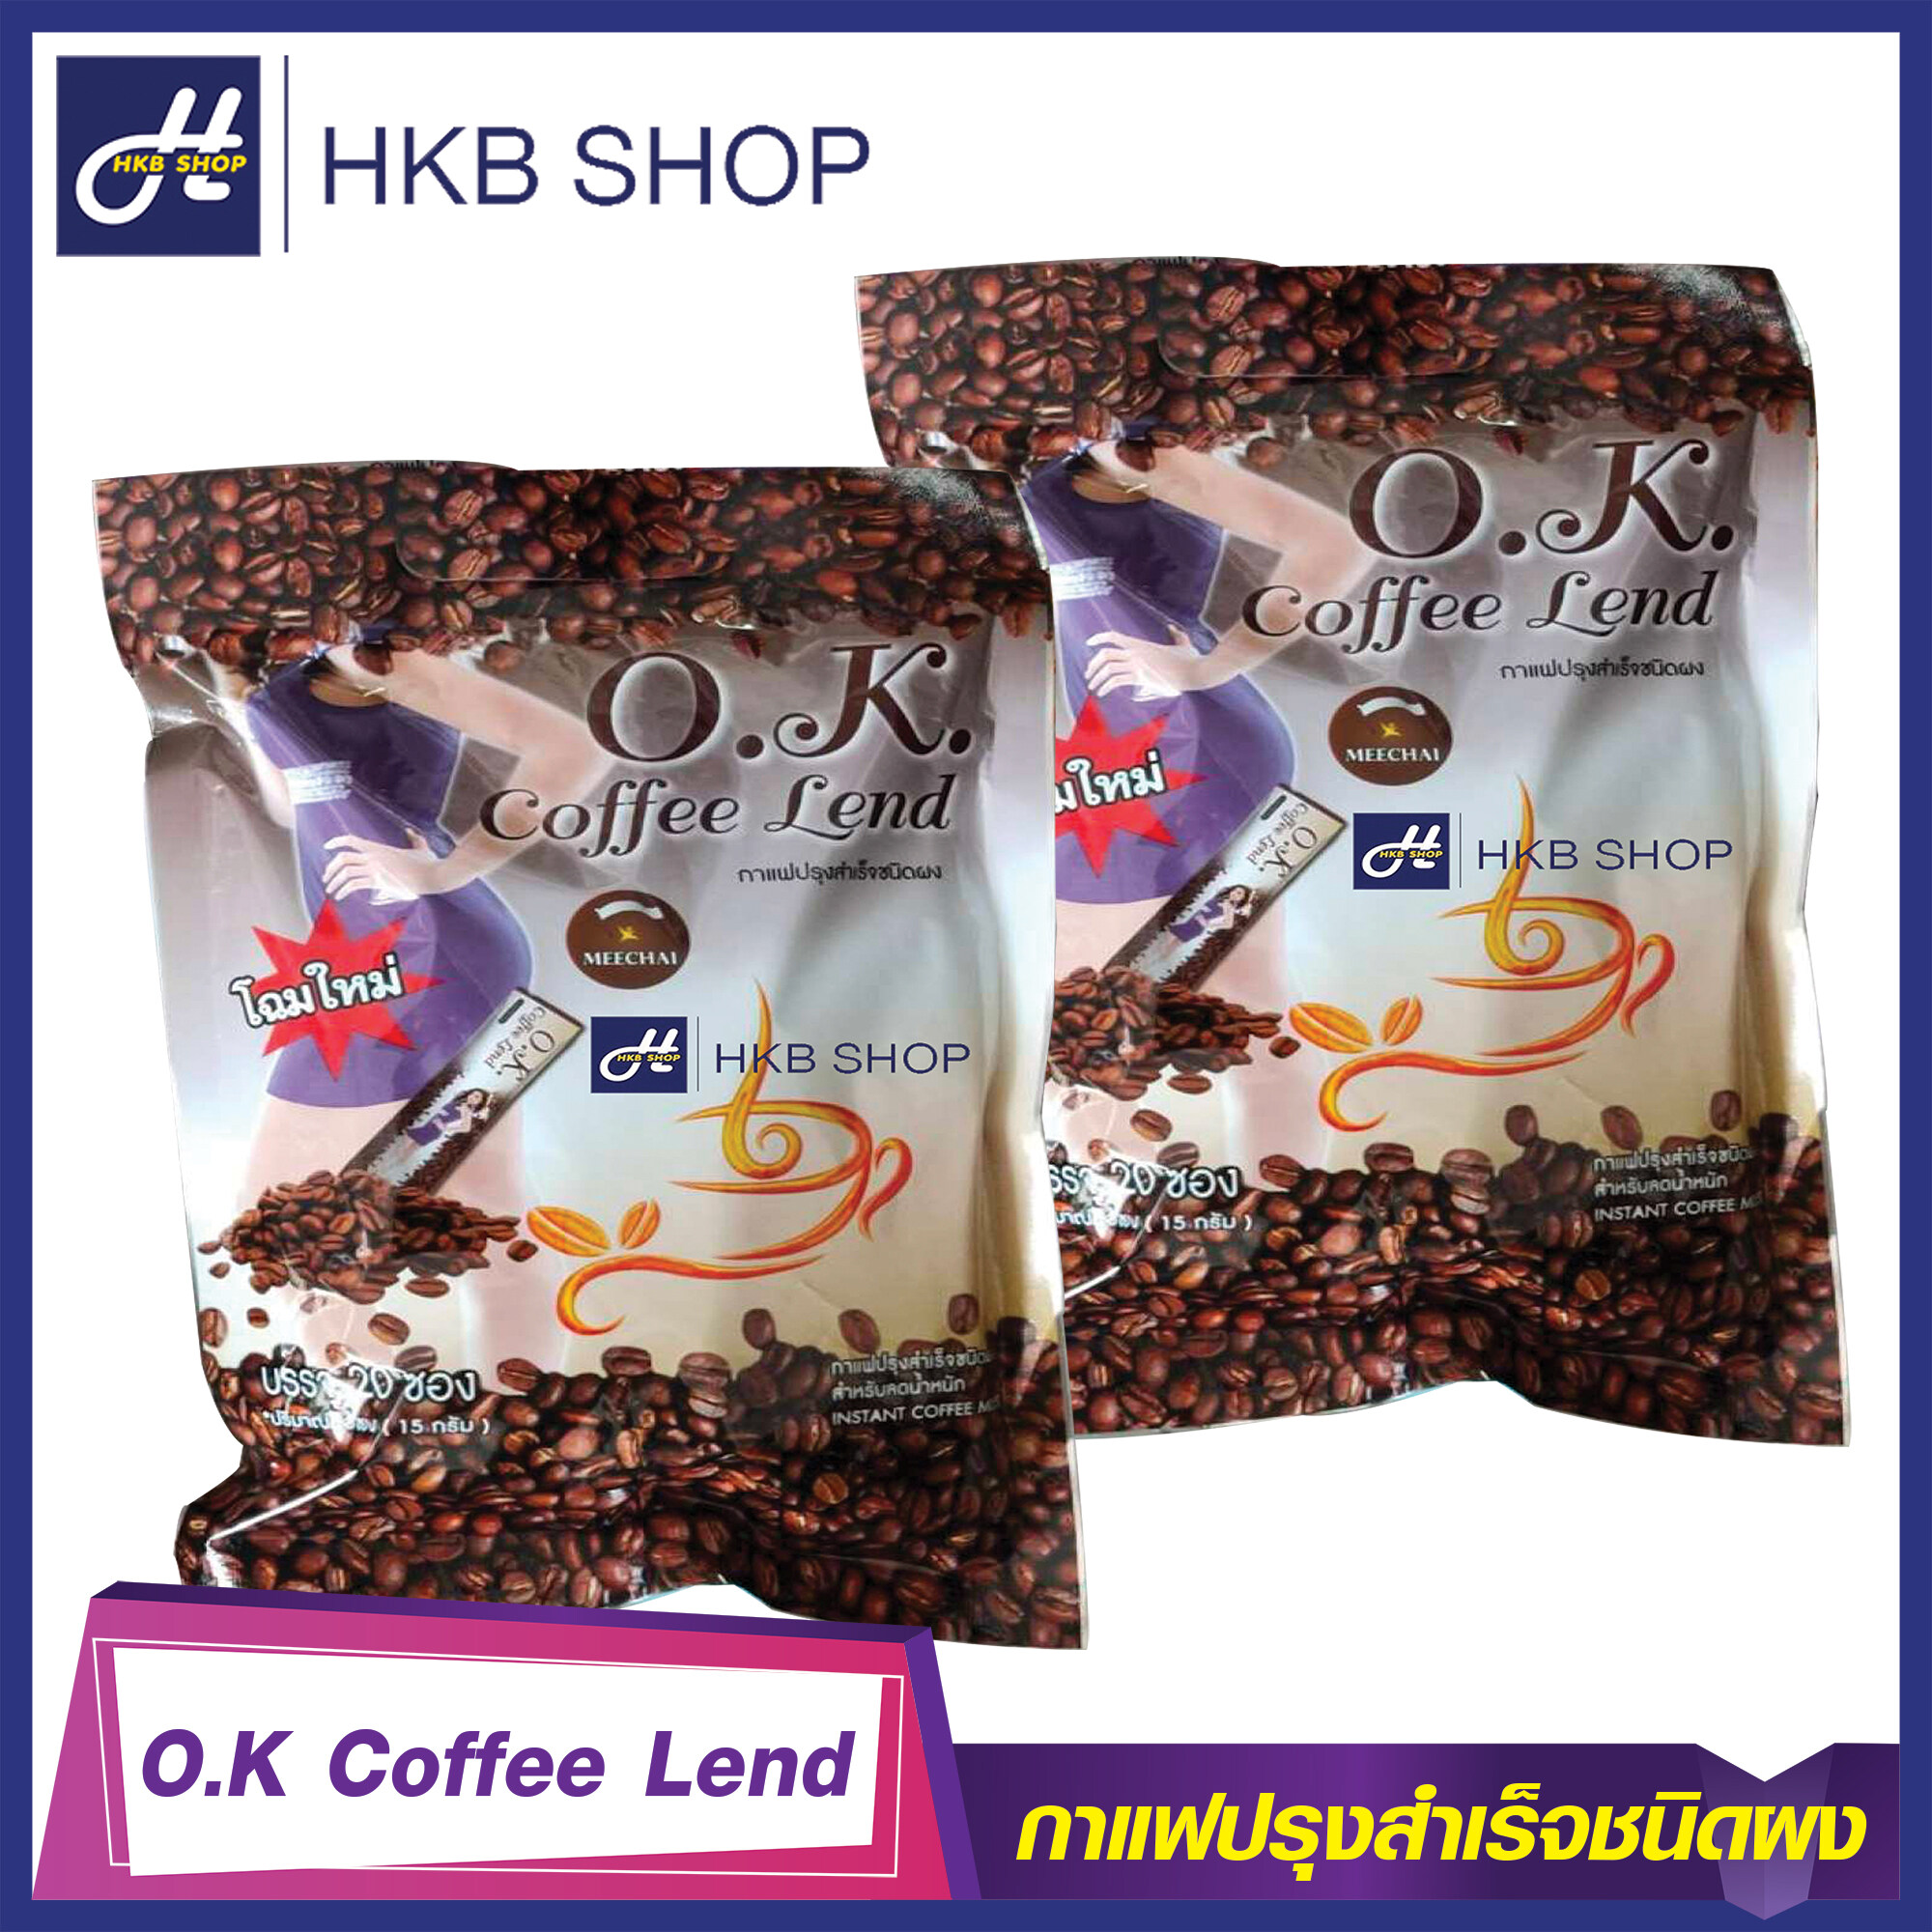 ⚡️2ห่อ⚡️ O.K. Coffee Lend โอเค คอฟฟี่ เลนด์ กาแฟปรุงสำเร็จชนิดผง By HKB SHOP